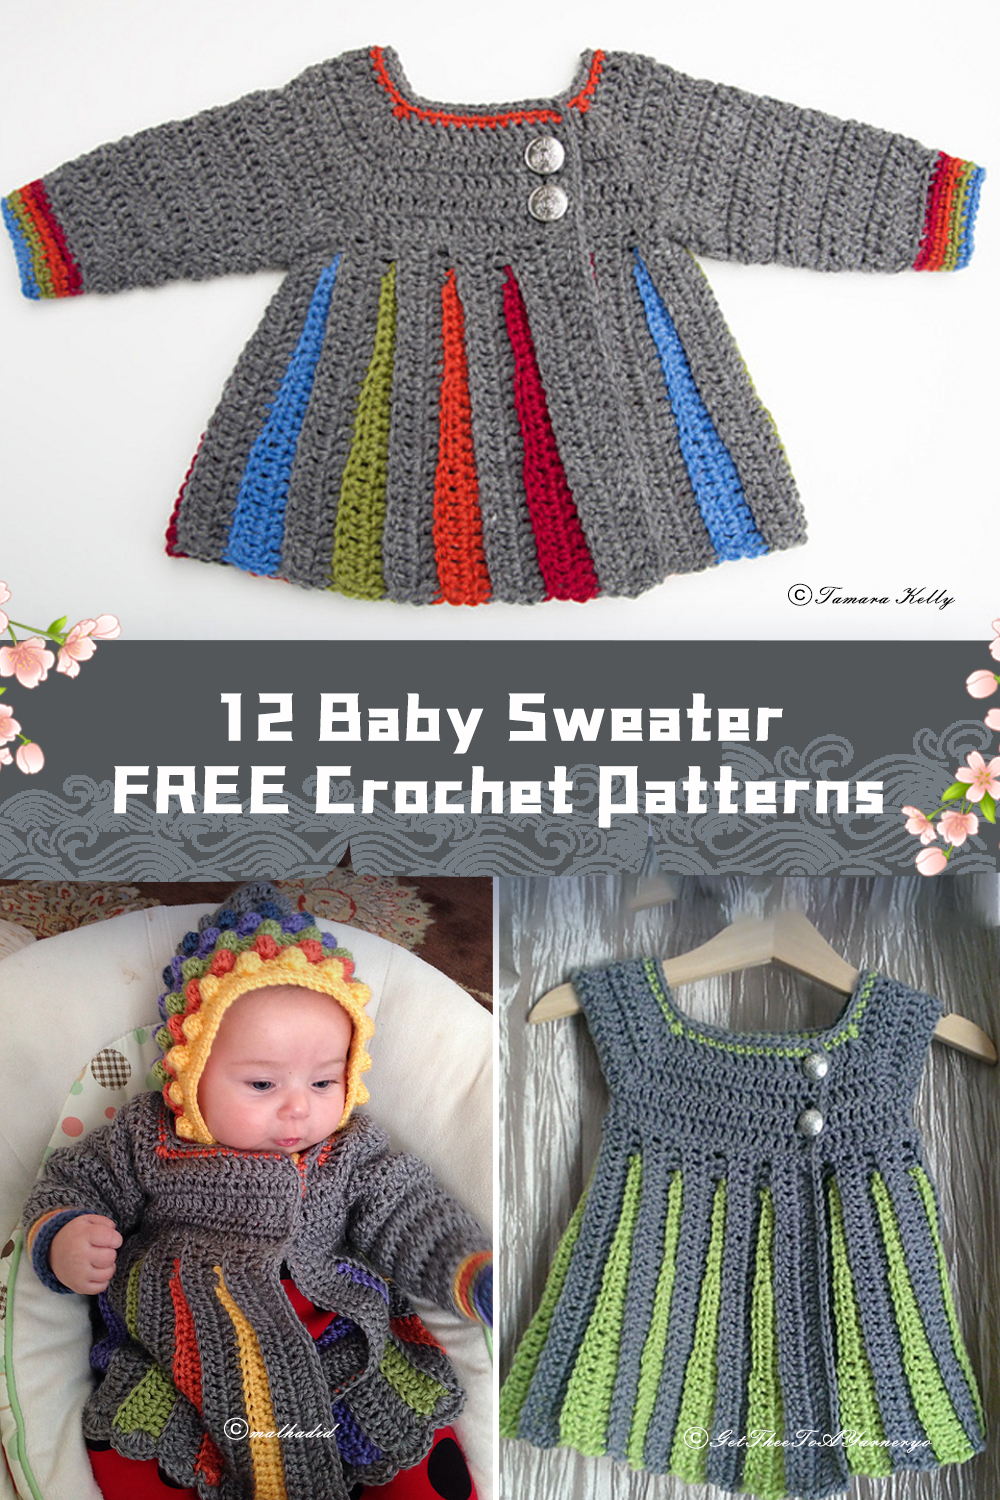 12 Baby Sweater Crochet Patterns - FREE - iGOODideas.com